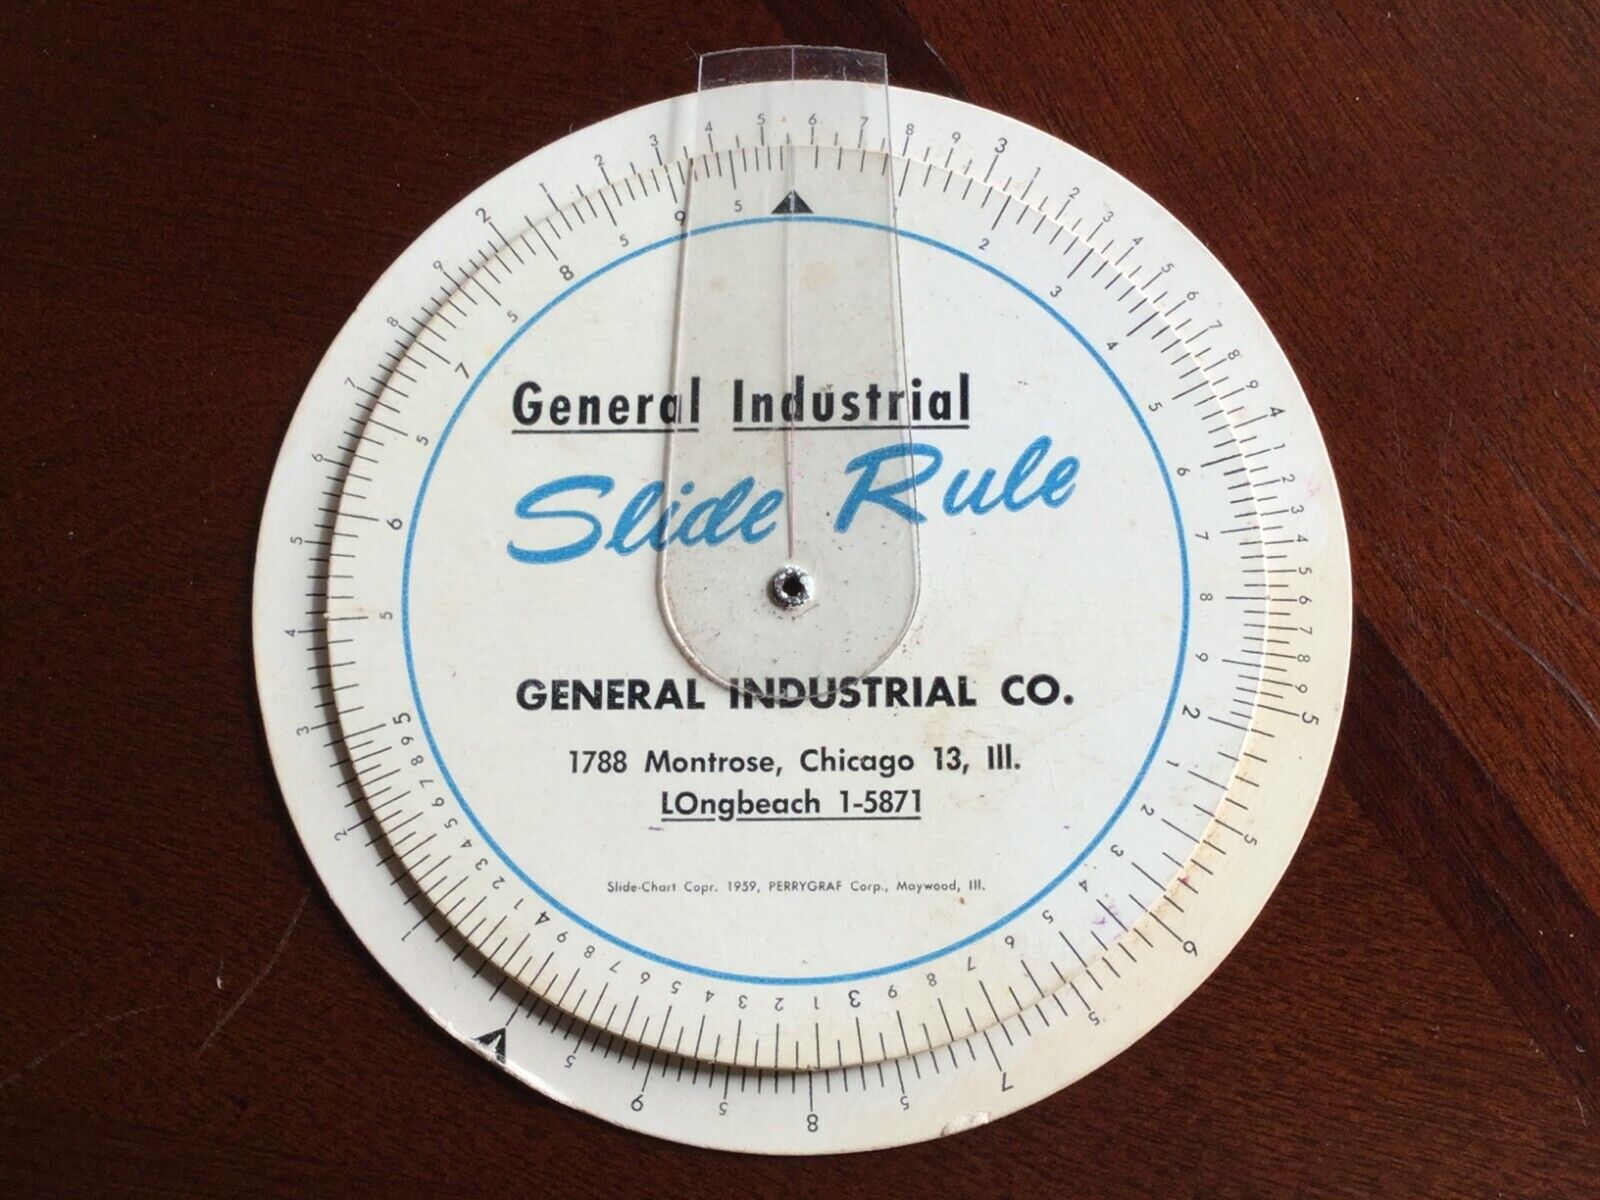 General Industrial Slide Rule General Industrial Co IL Slide-Chart Copr. 1959